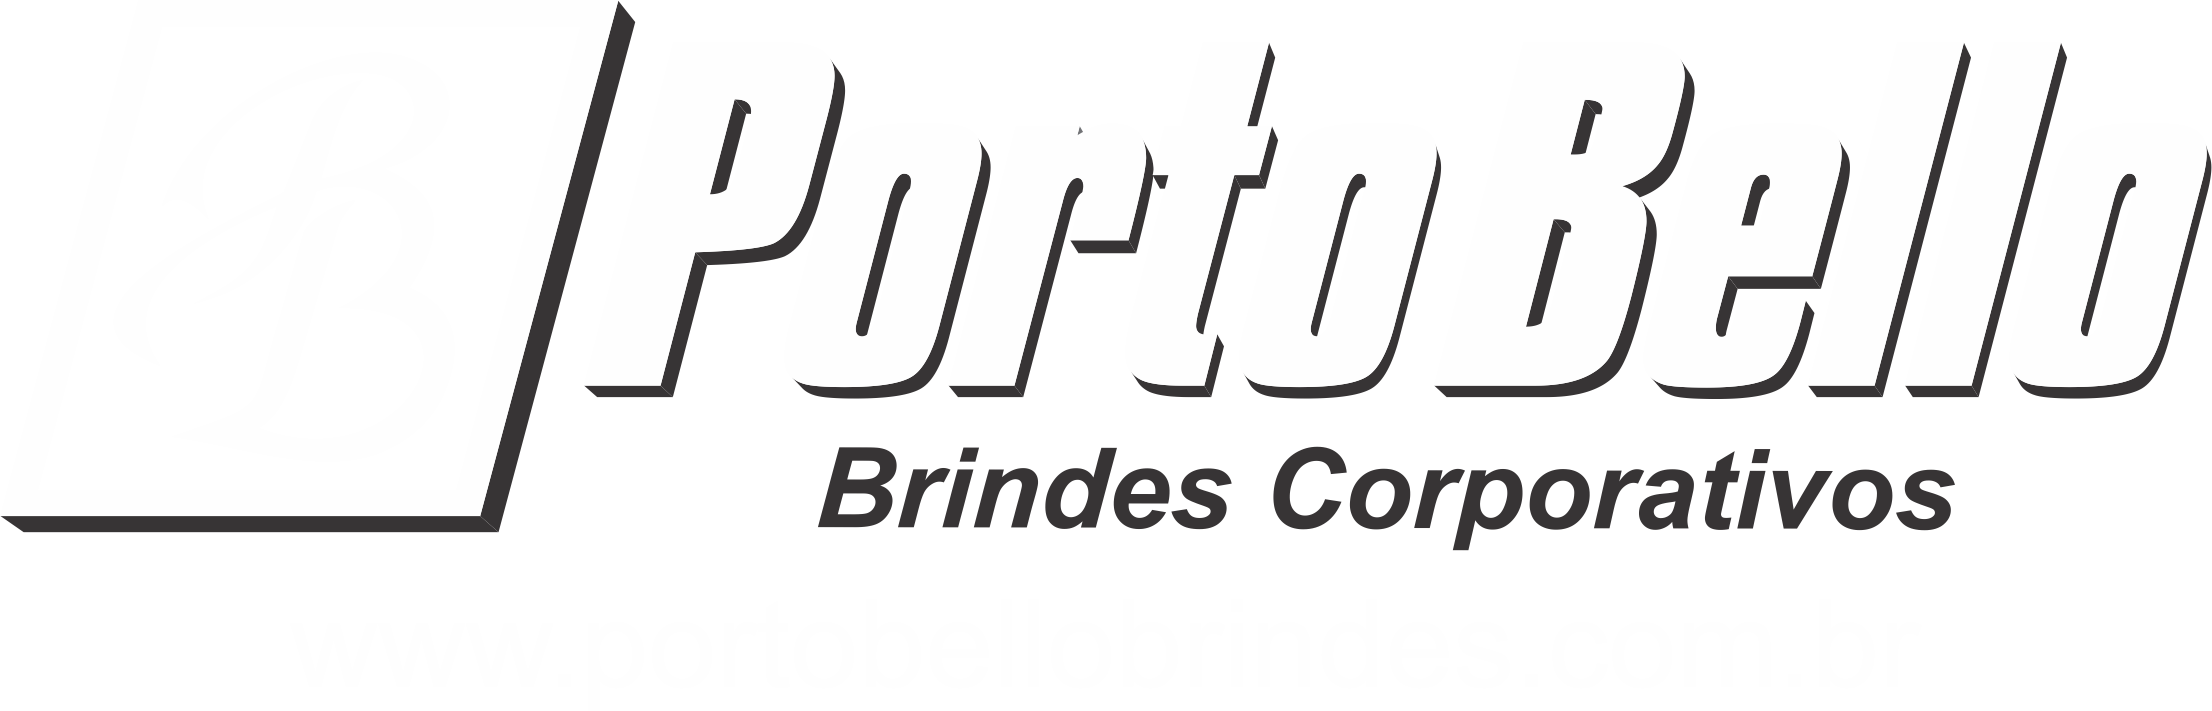 Portobello Brindes | Produtos Personalizados |Presentes Corporativos